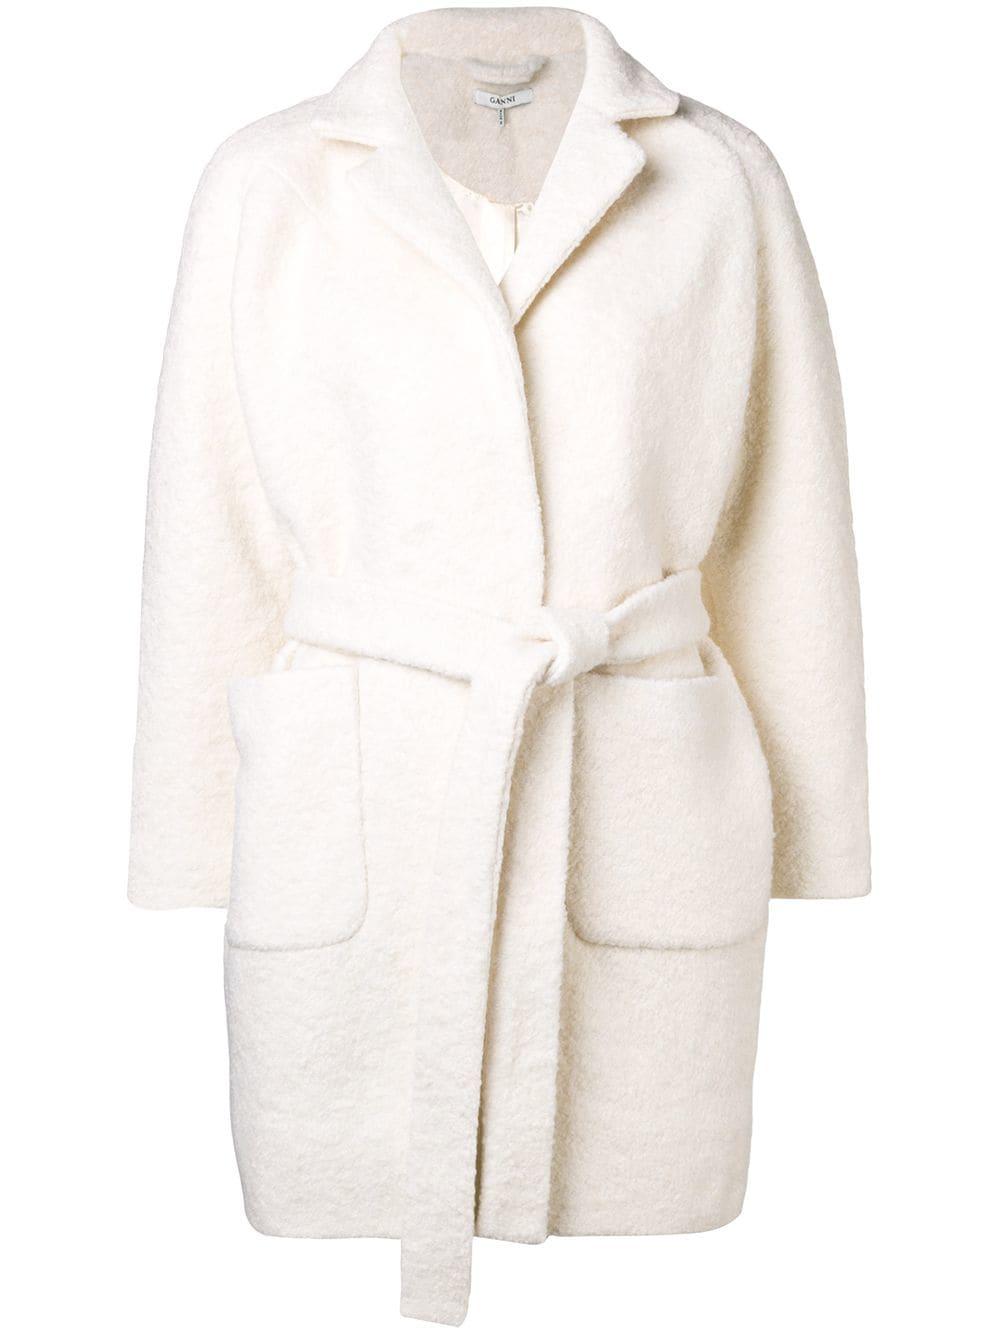 Ganni Wool Fenn Belted Coat in White - Lyst